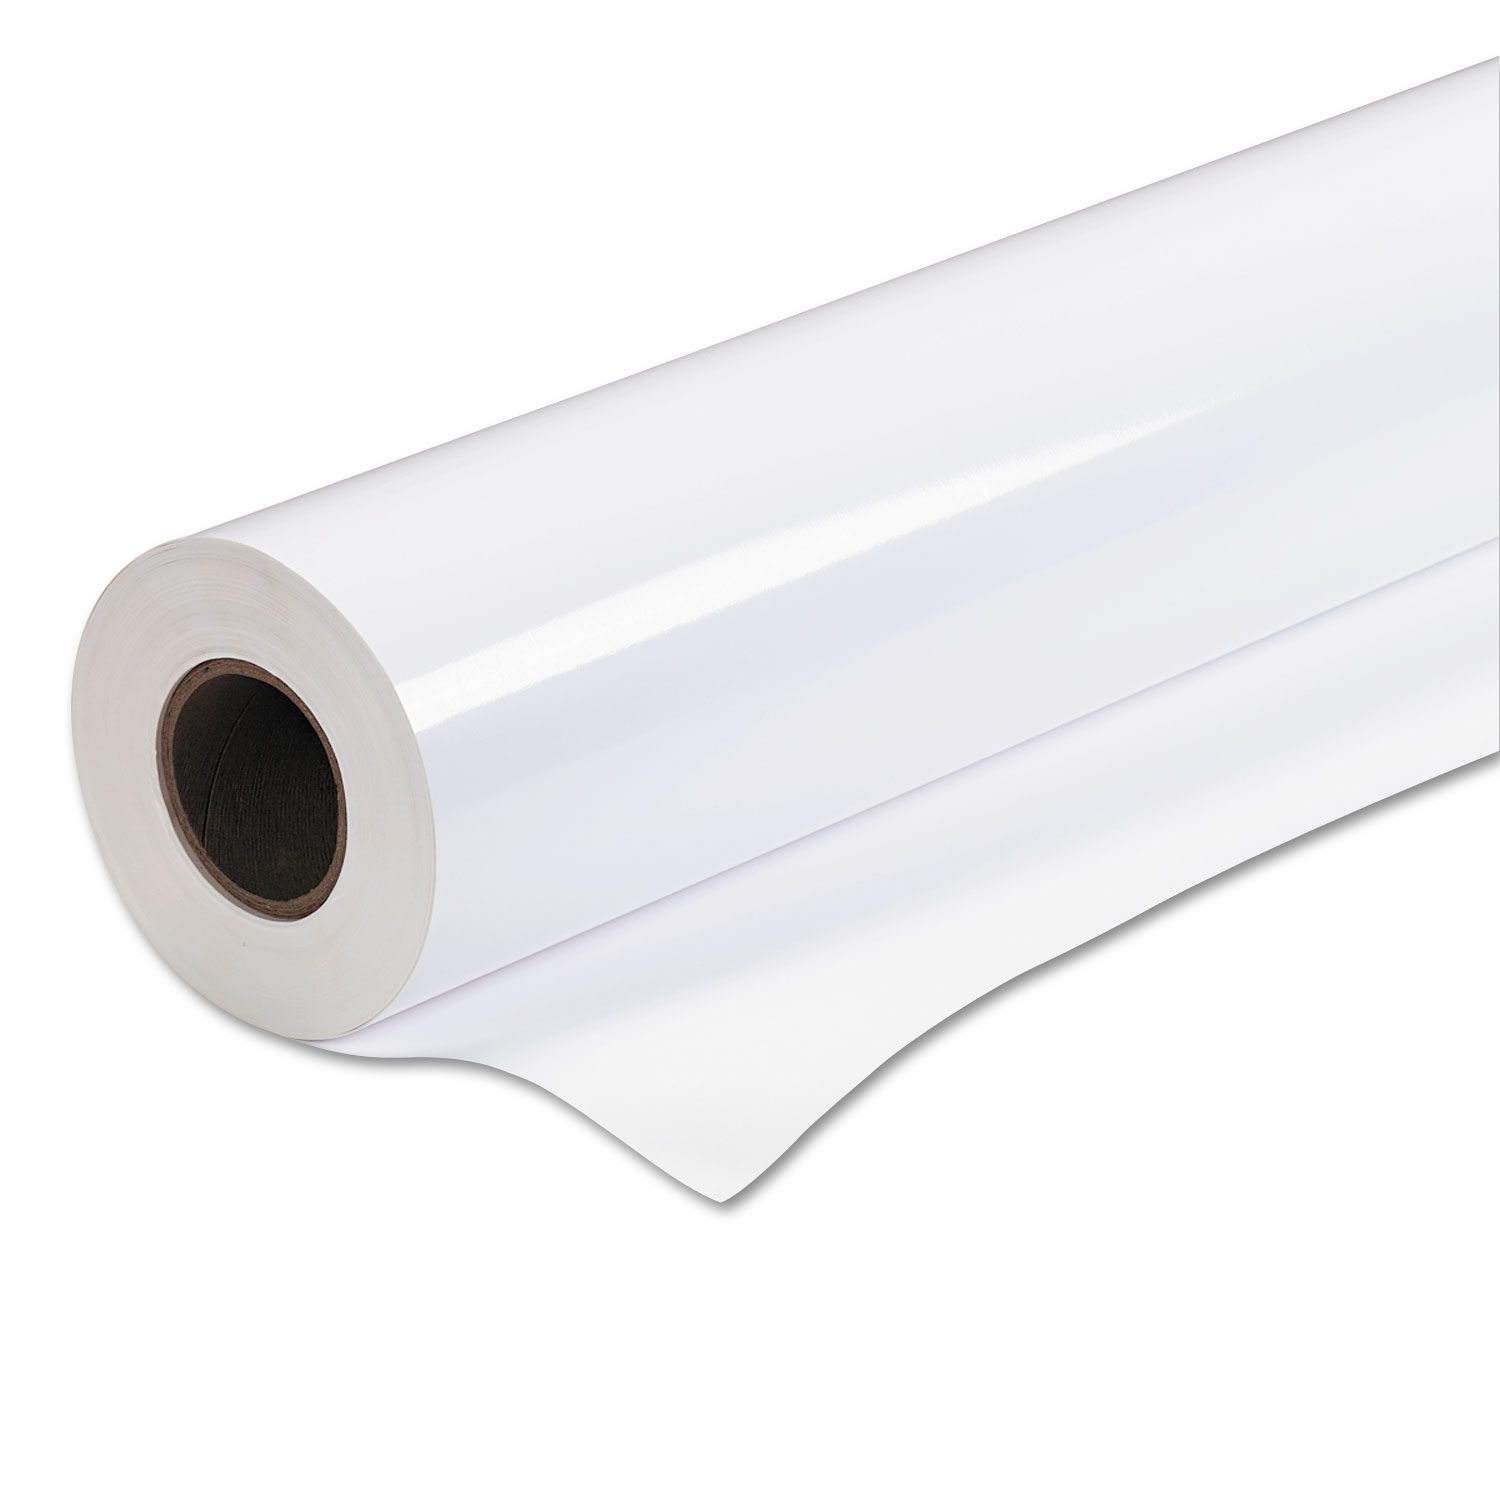  Epson S041391 Premium Glossy Photo Paper Roll, 2 Core, 36 x 100 ft, Glossy White (EPSS041391) 